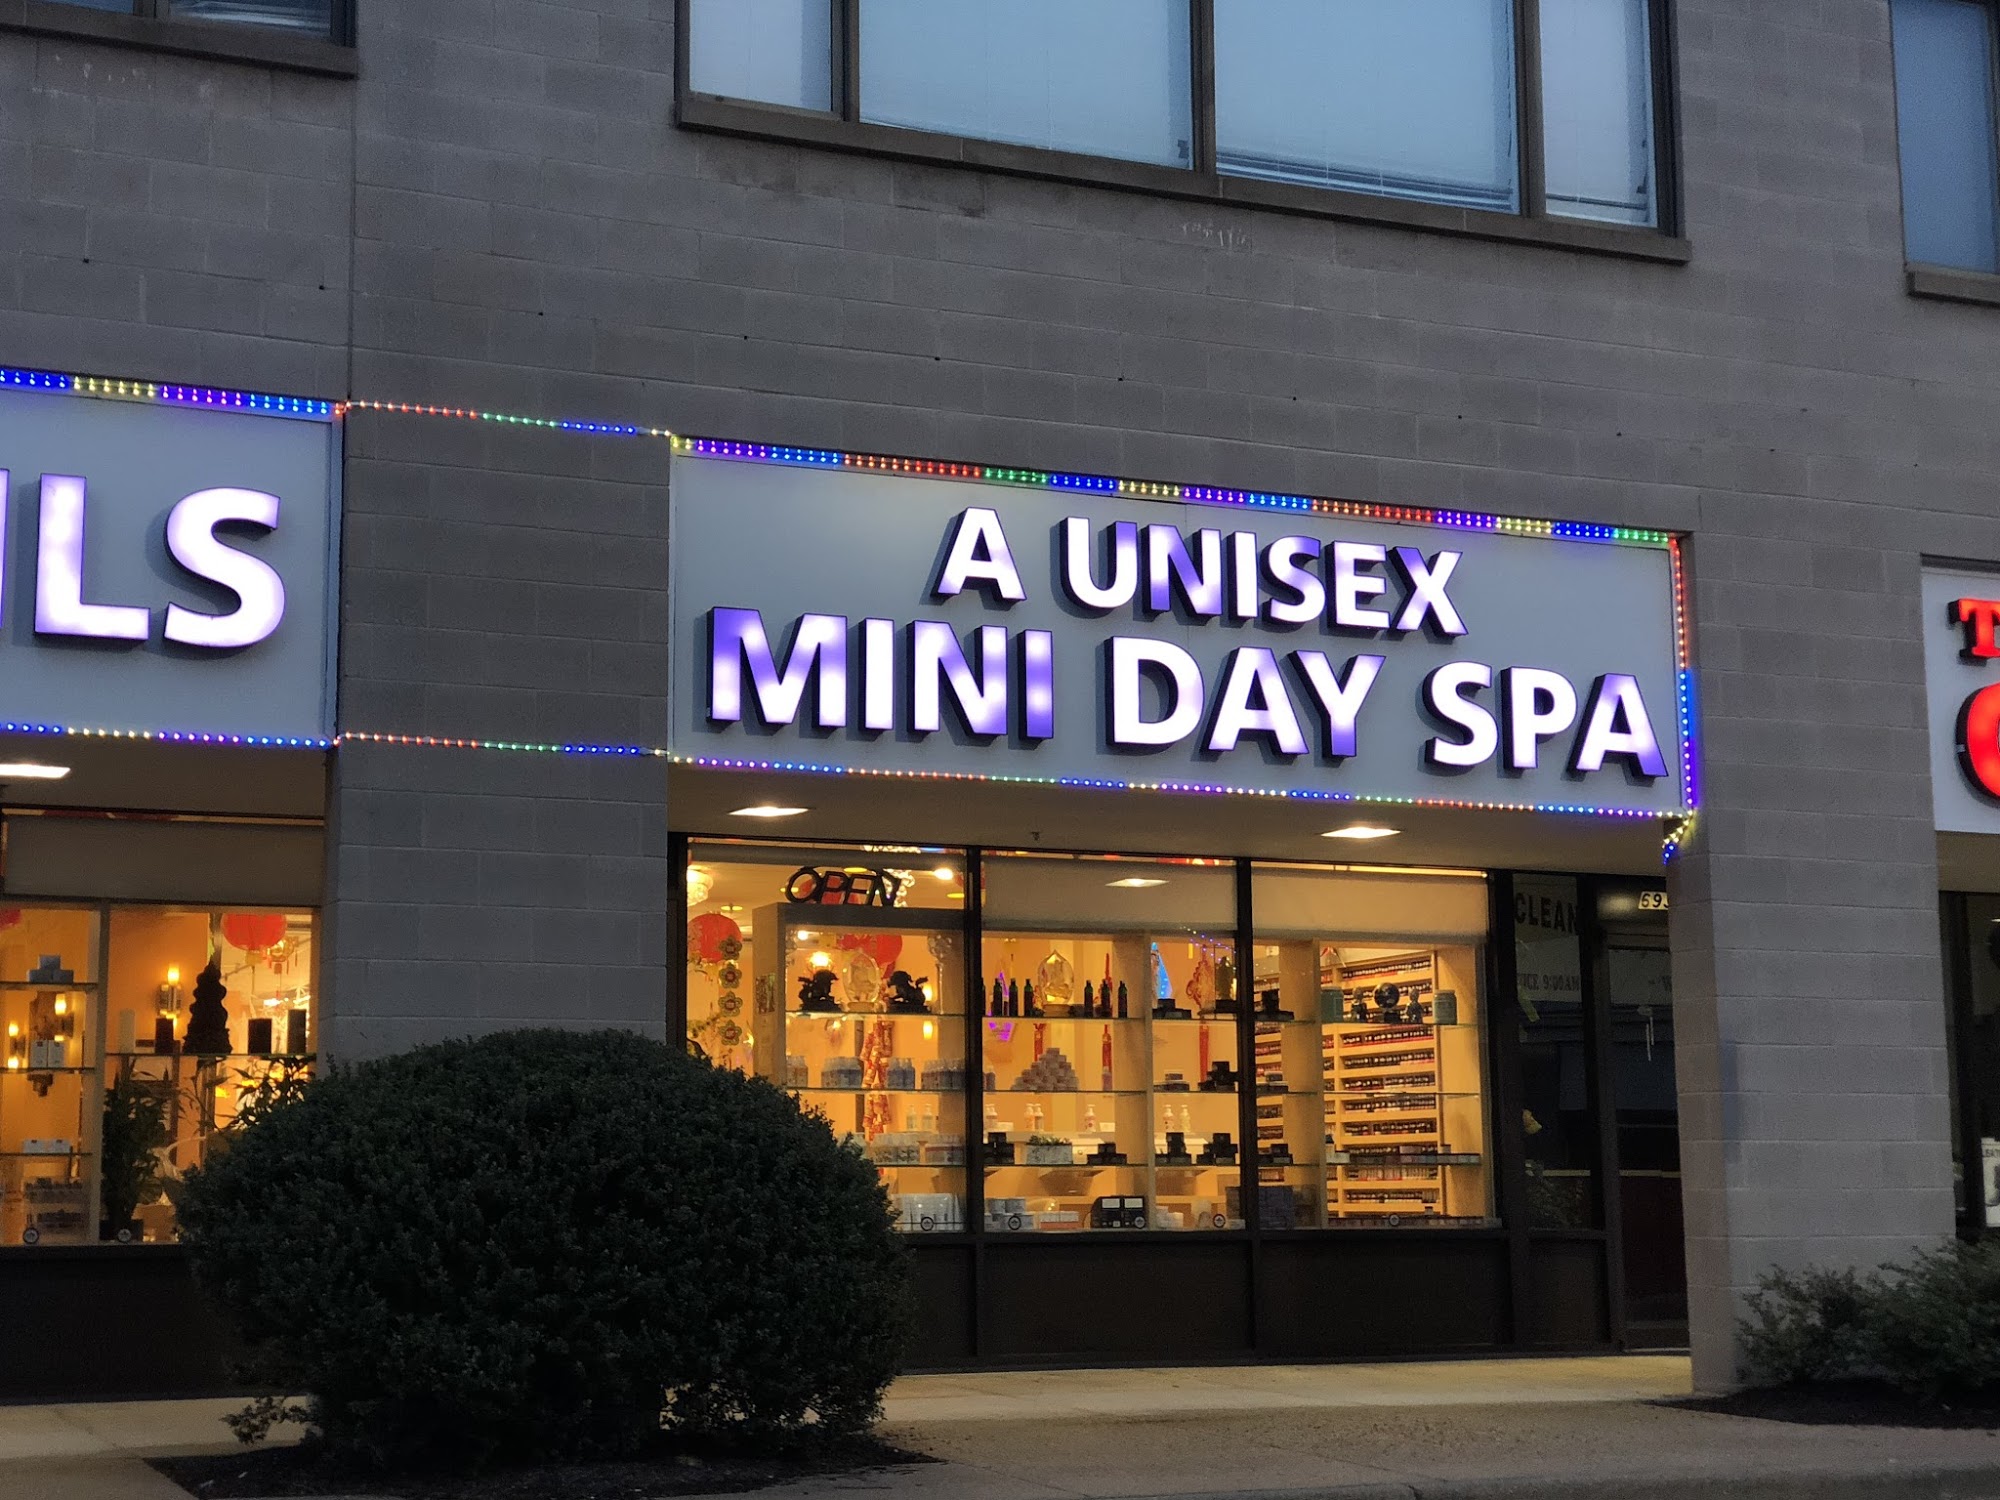 Glam A Unisex Mini Day Spa